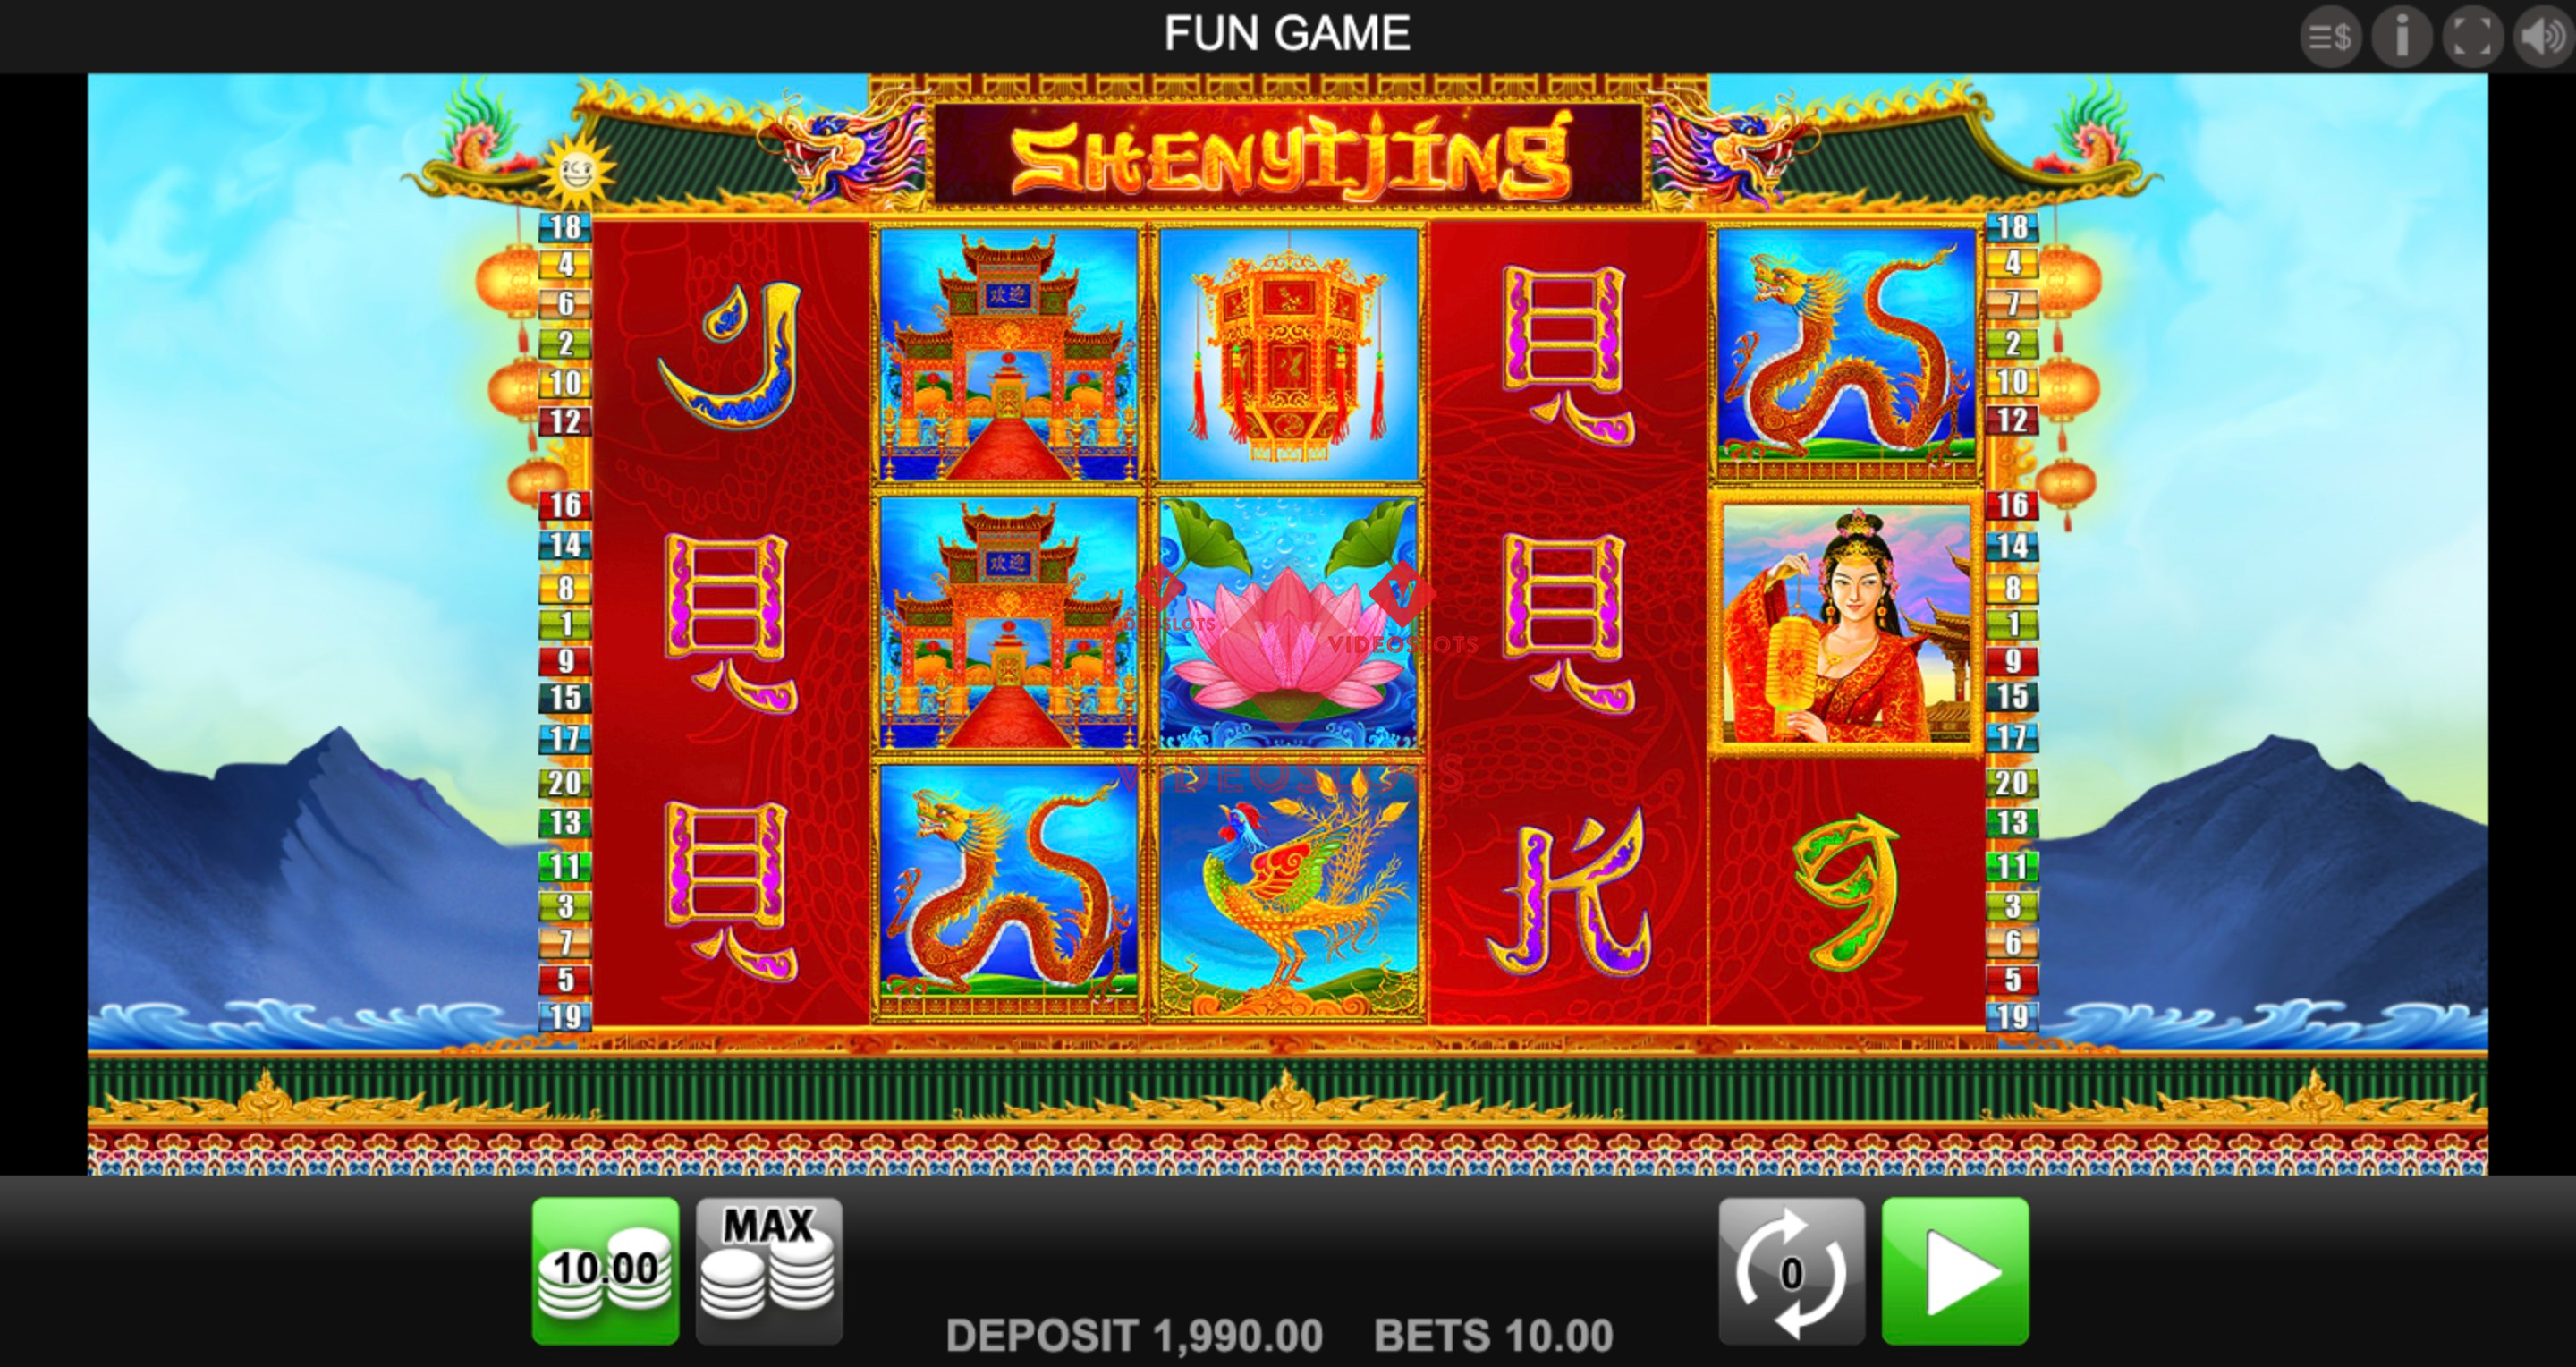 Base Game for Shenyijing slot from Merkur